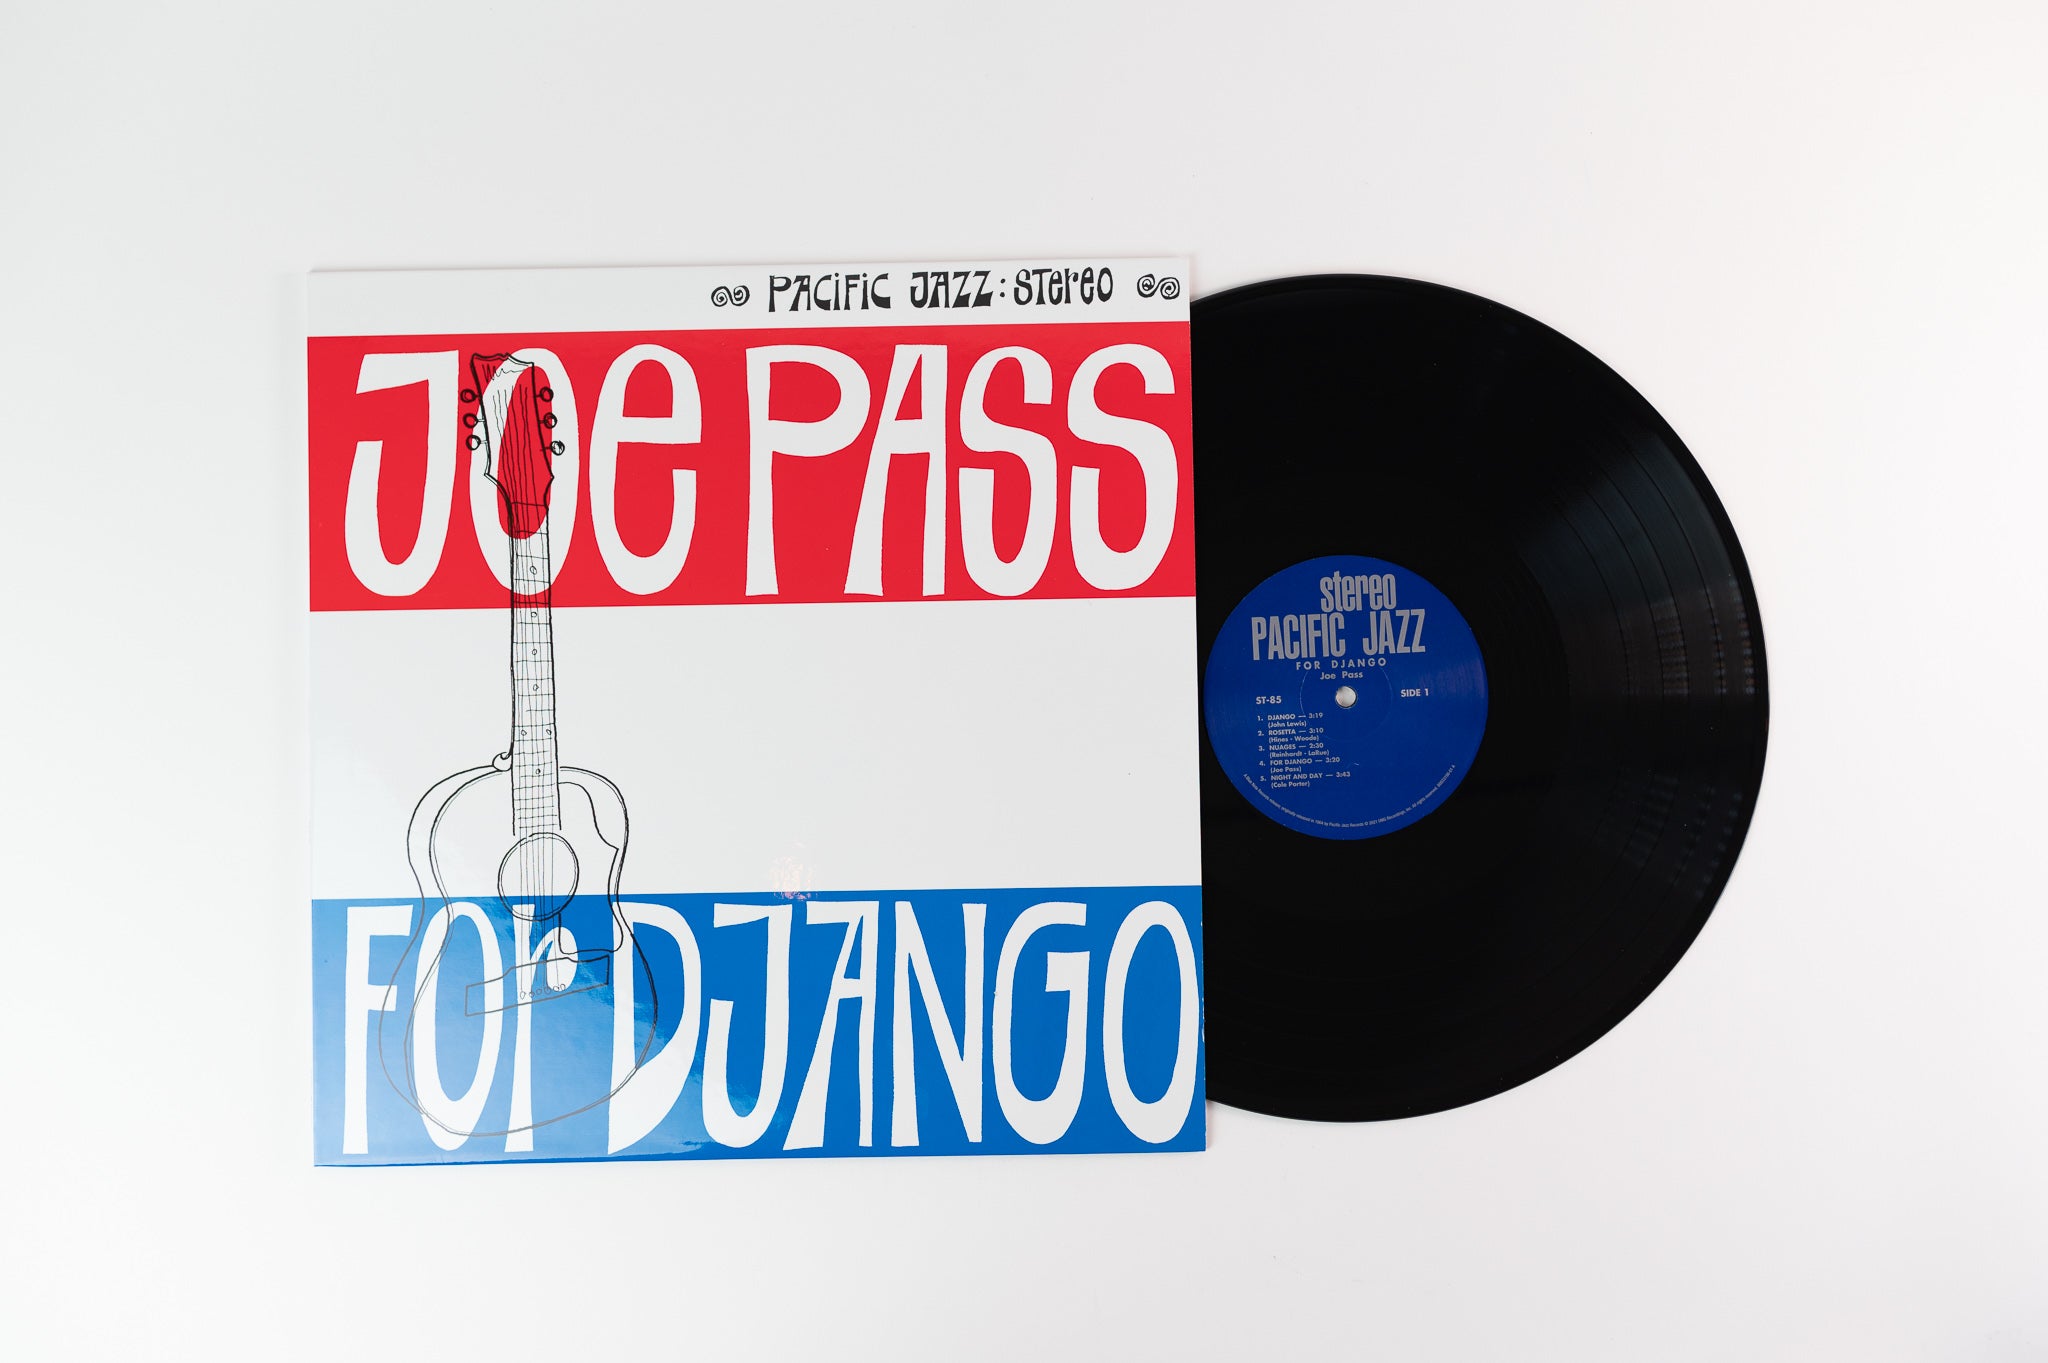 Joe Pass - For Django on Pacific Jazz Tone Poet Series Reissue